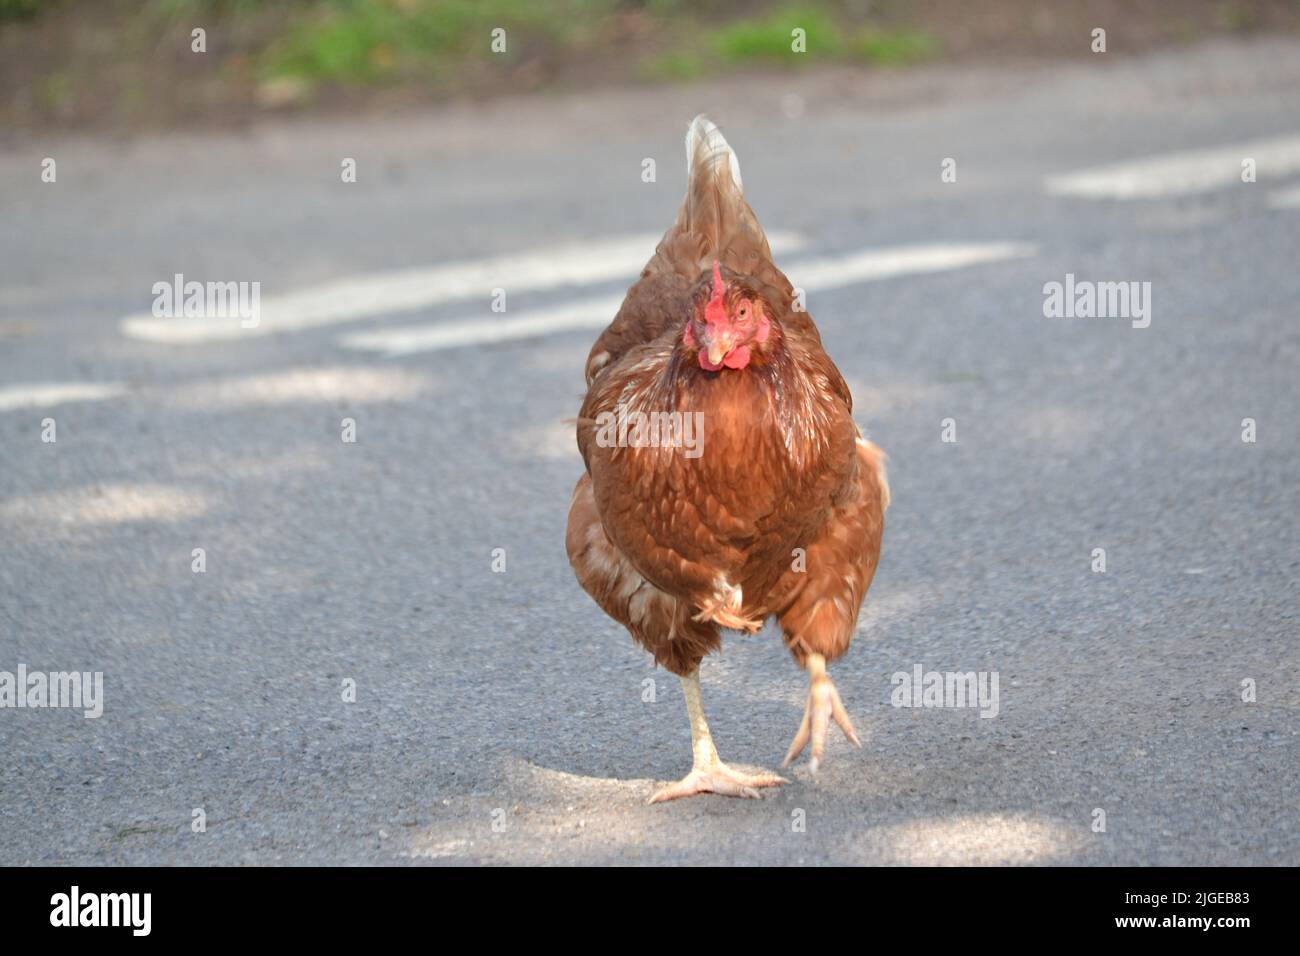 Why Did The Chicken Cross The Road? Free Range Chicken - Gallus Gallus Domesticus - Junglefowl - North Yorkshire - UK Stock Photo